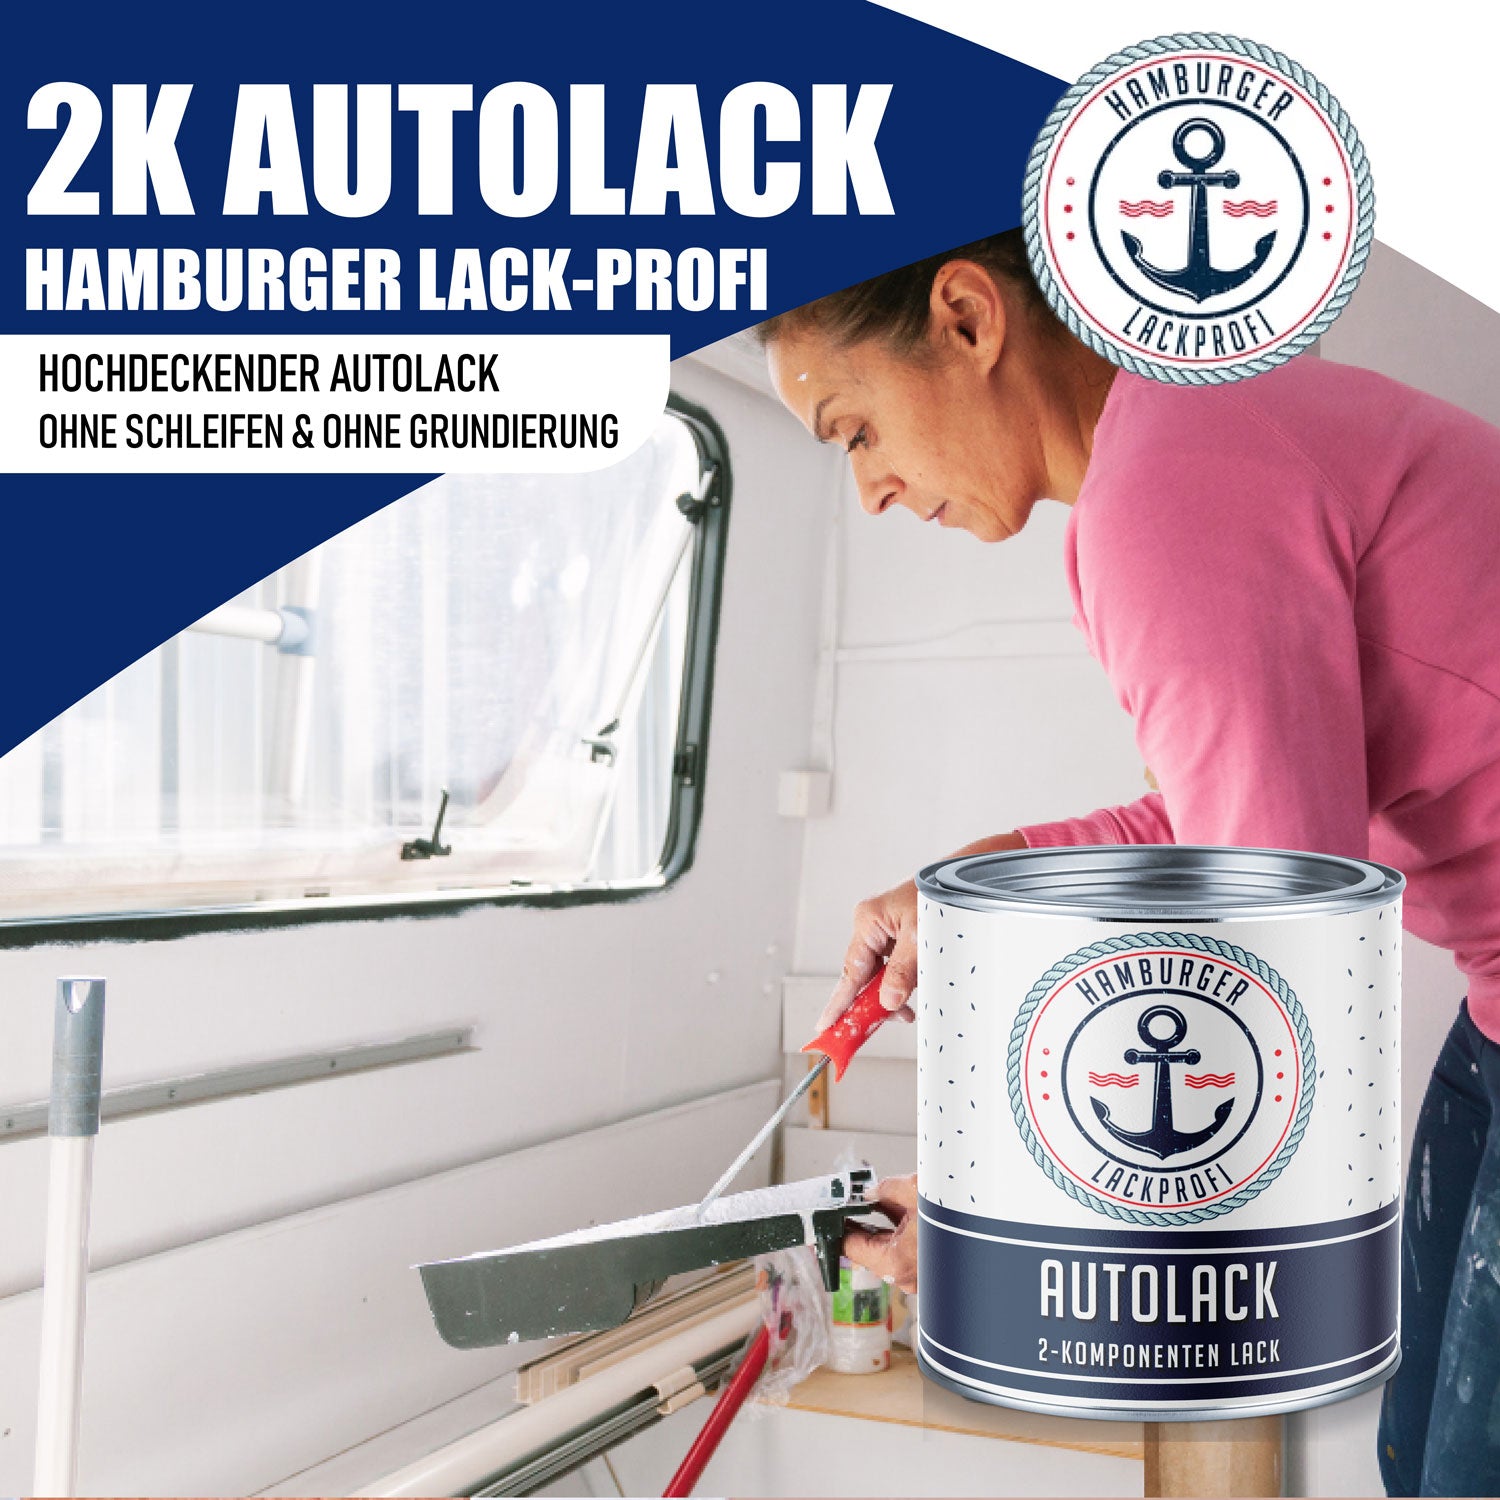 Hamburger Lack-Profi 2K Autolack in Purpurrot RAL 3004 mit Lackierset (X300) & Verdünnung (1 L) - 30% Sparangebot